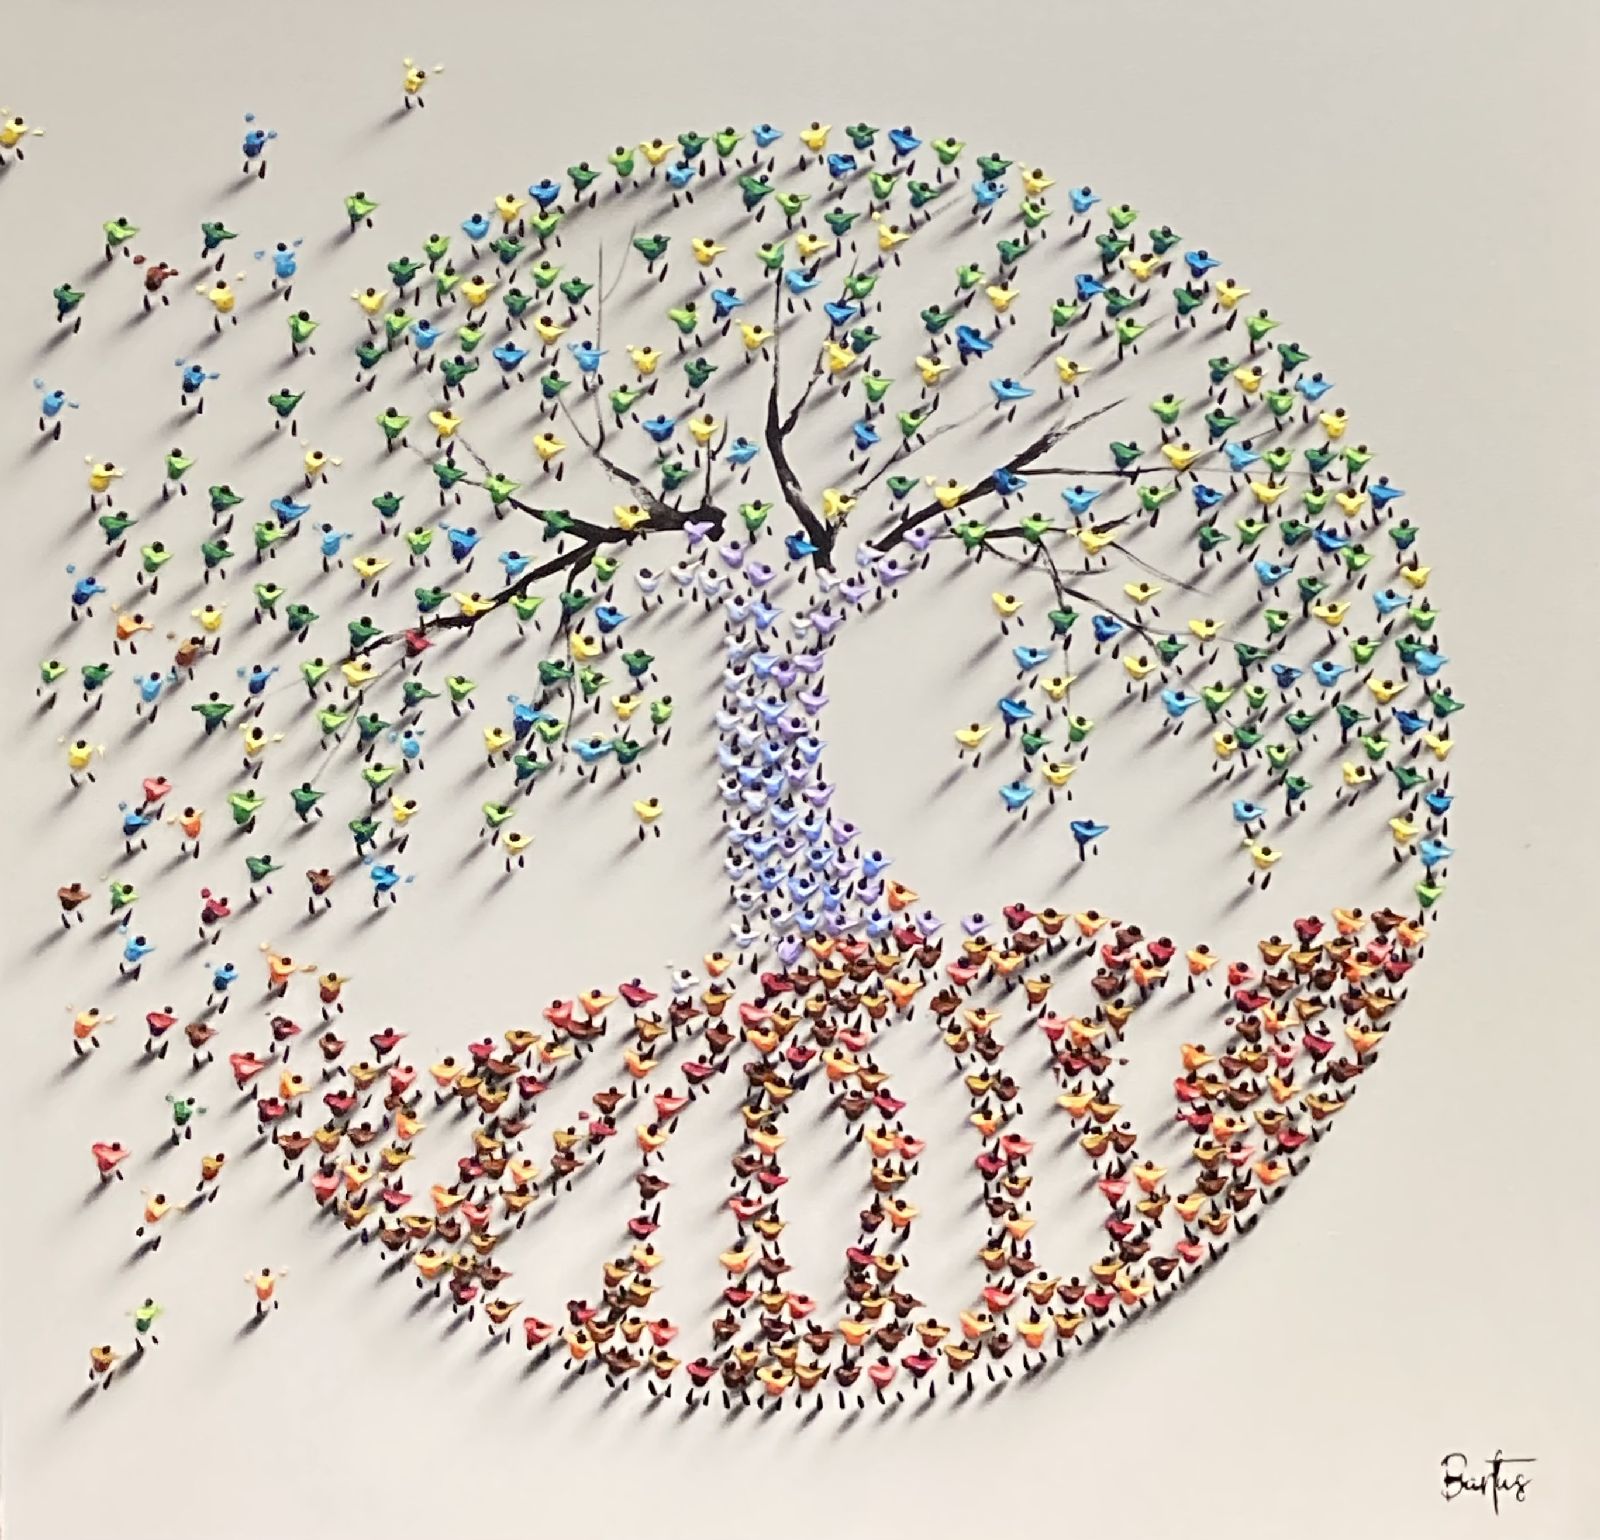 Francisco Bartus - Tree of life VI